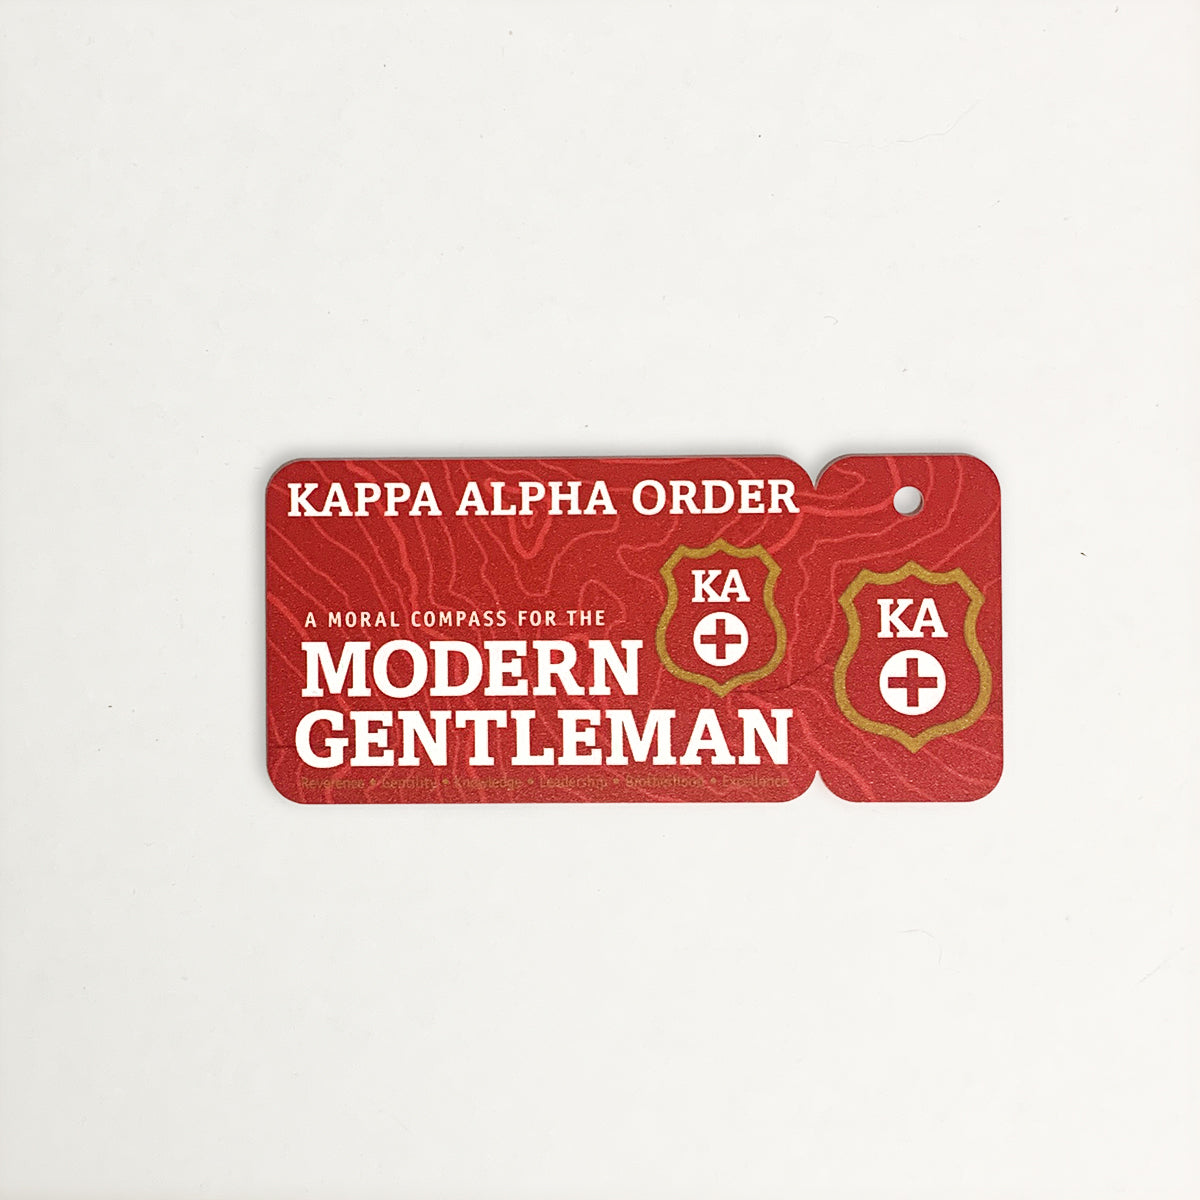 Kappa Alpha New Member Packet